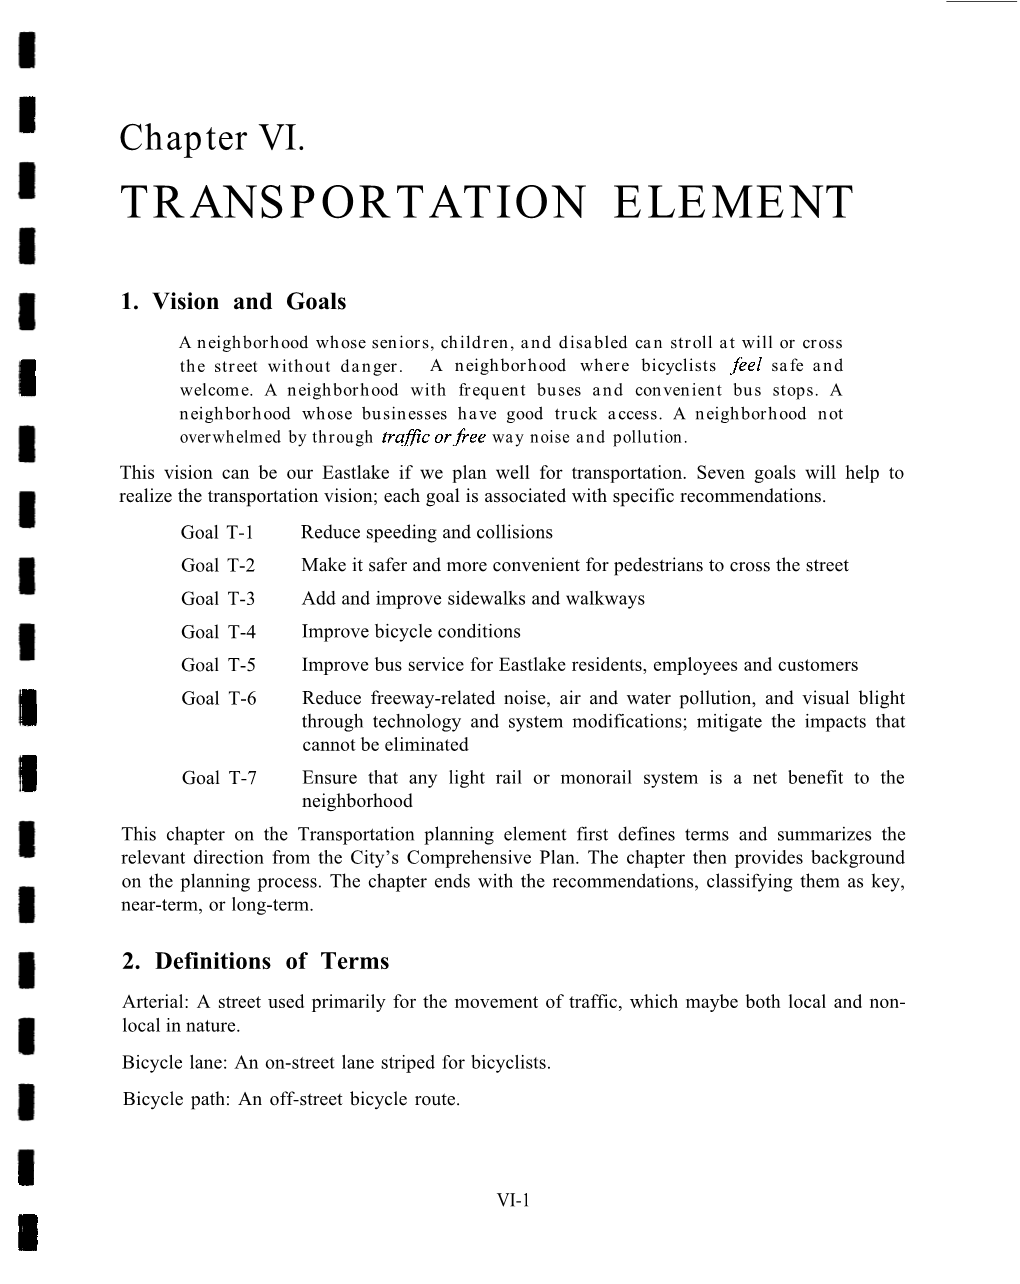 Transportation Element